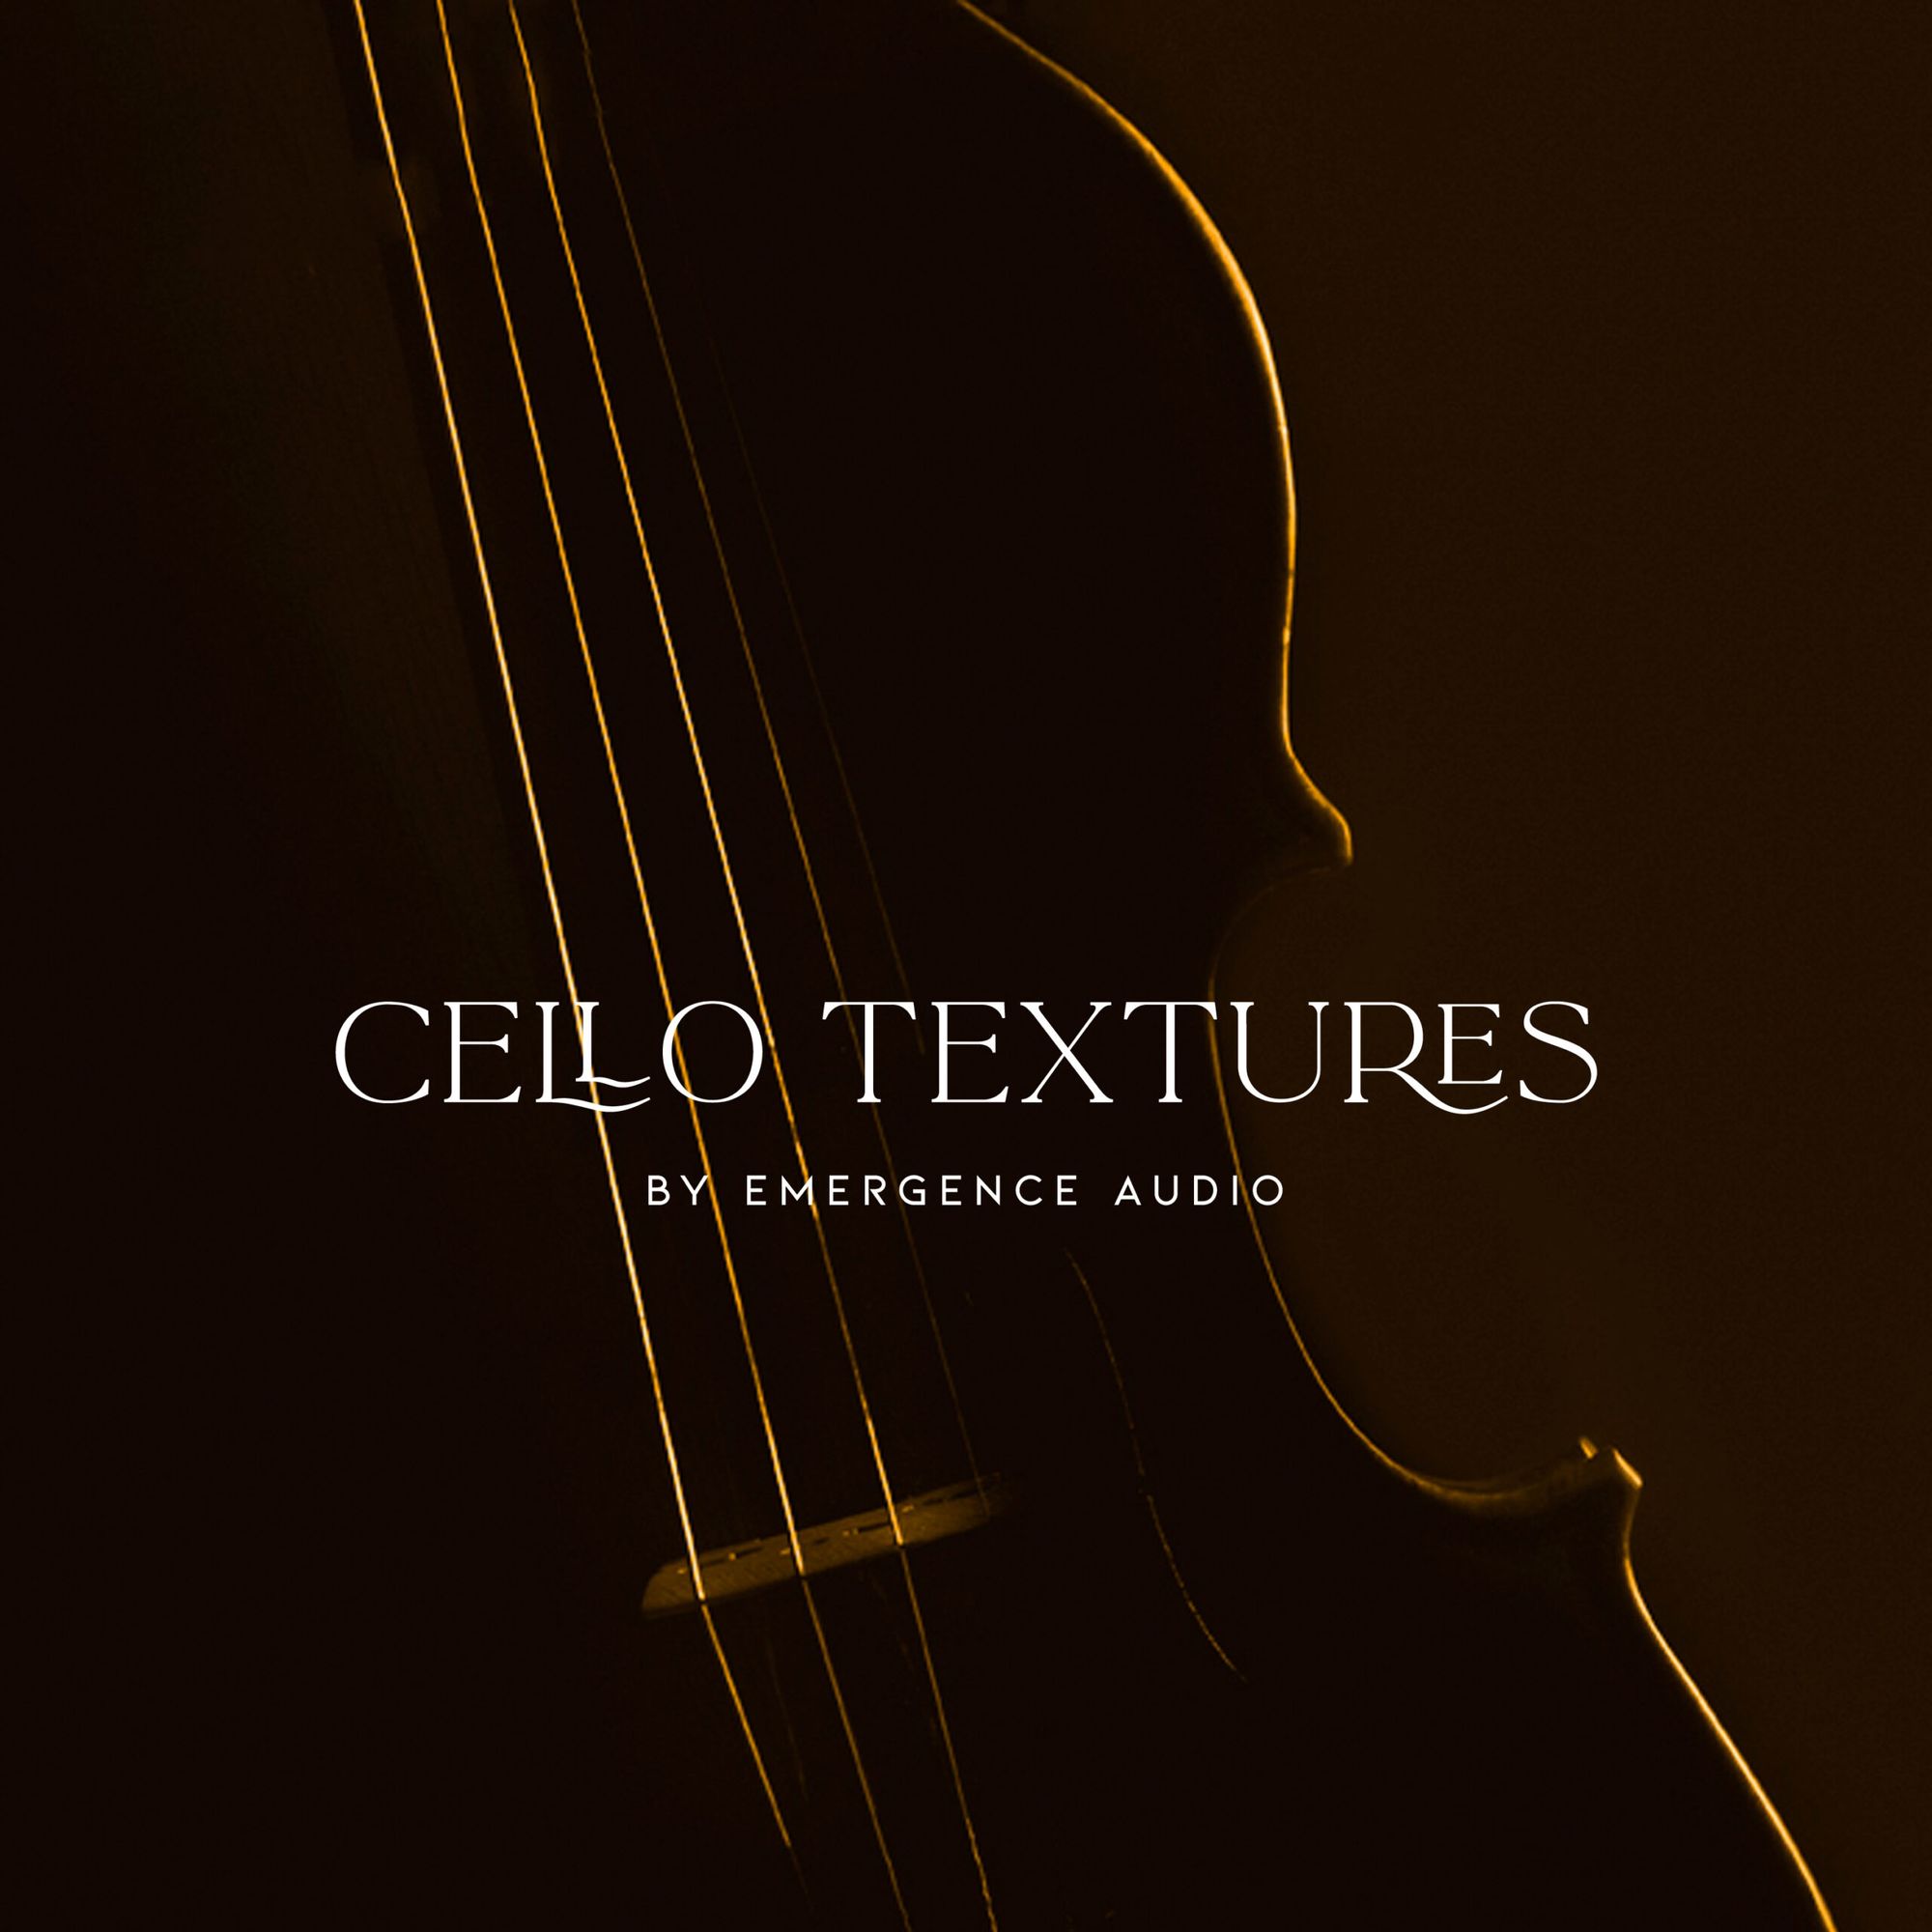 Cello Textures - Emergence Audio